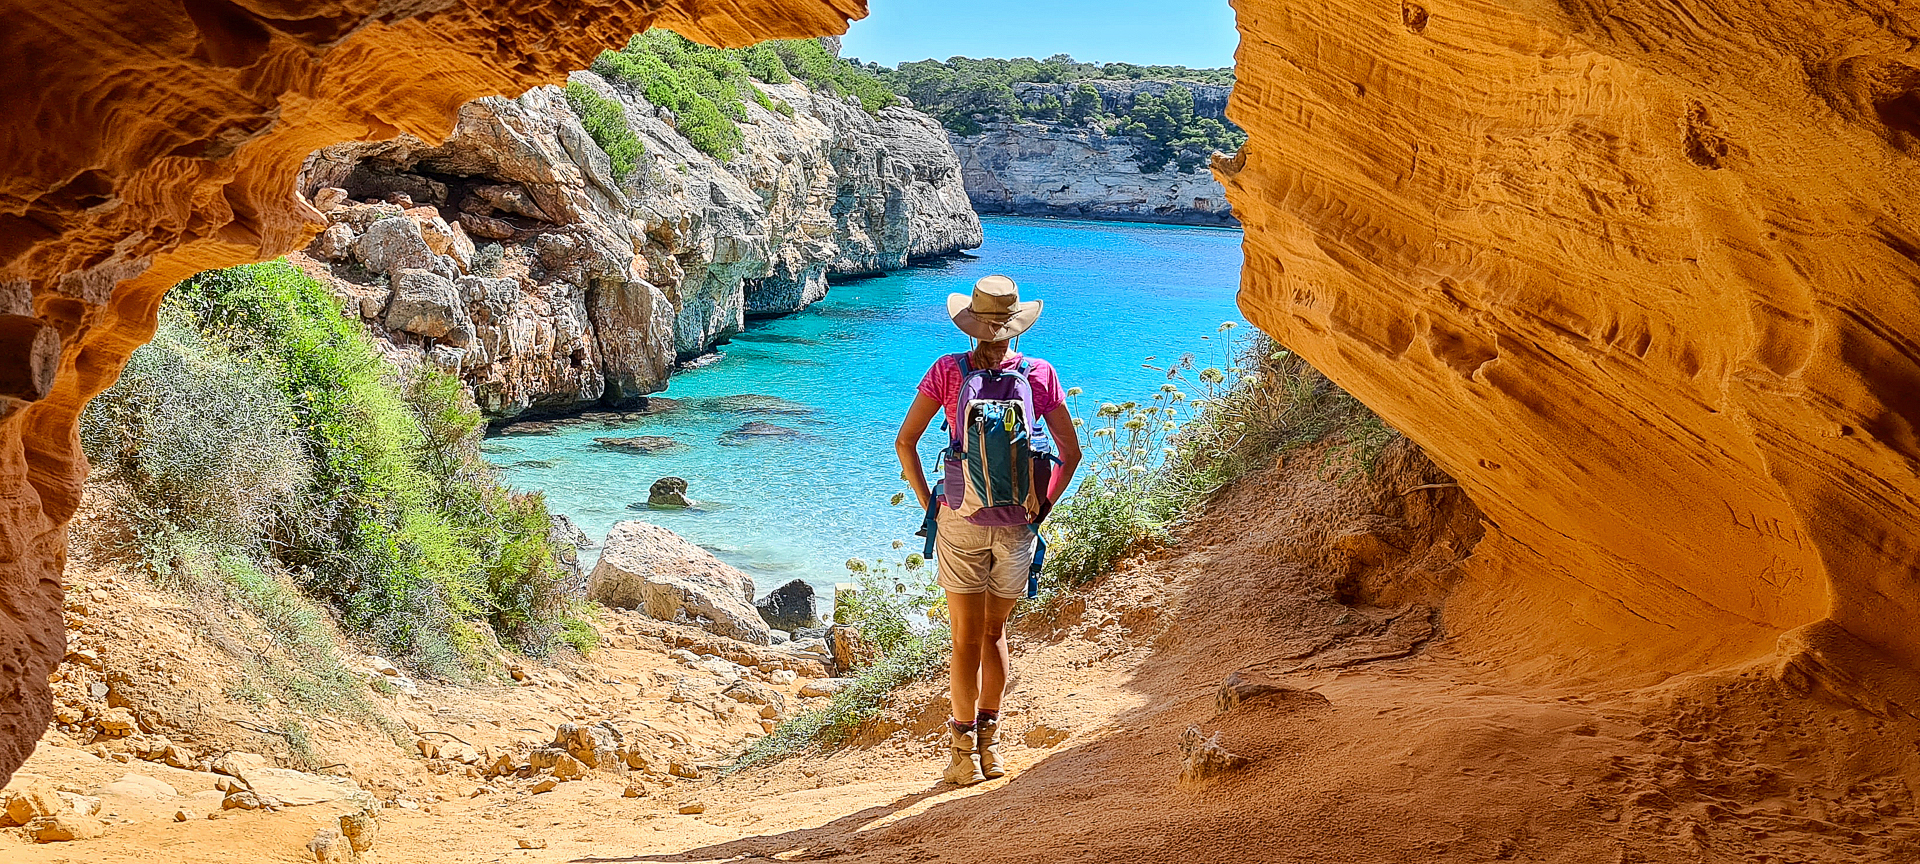 Sand cave in Cala des Moro en Mallorca, the Balearic Islands